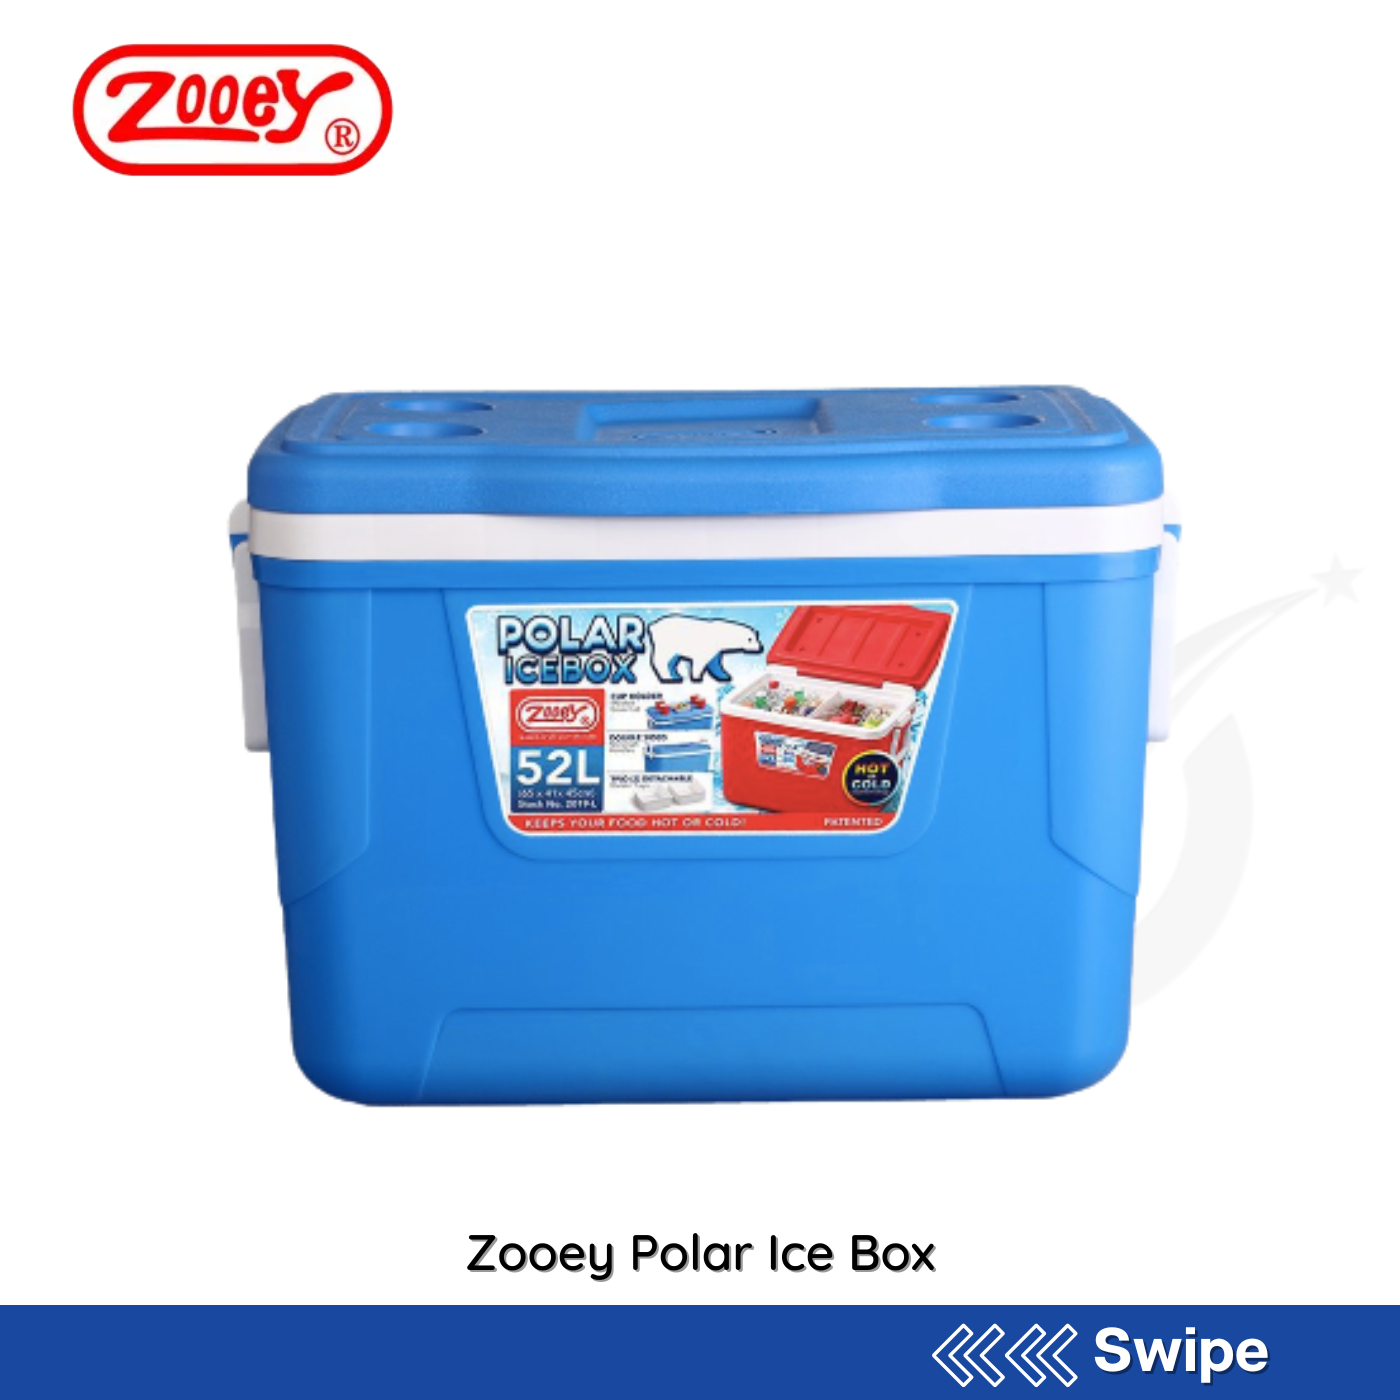 Zooey Polar Ice Box - People's Choice Marketing